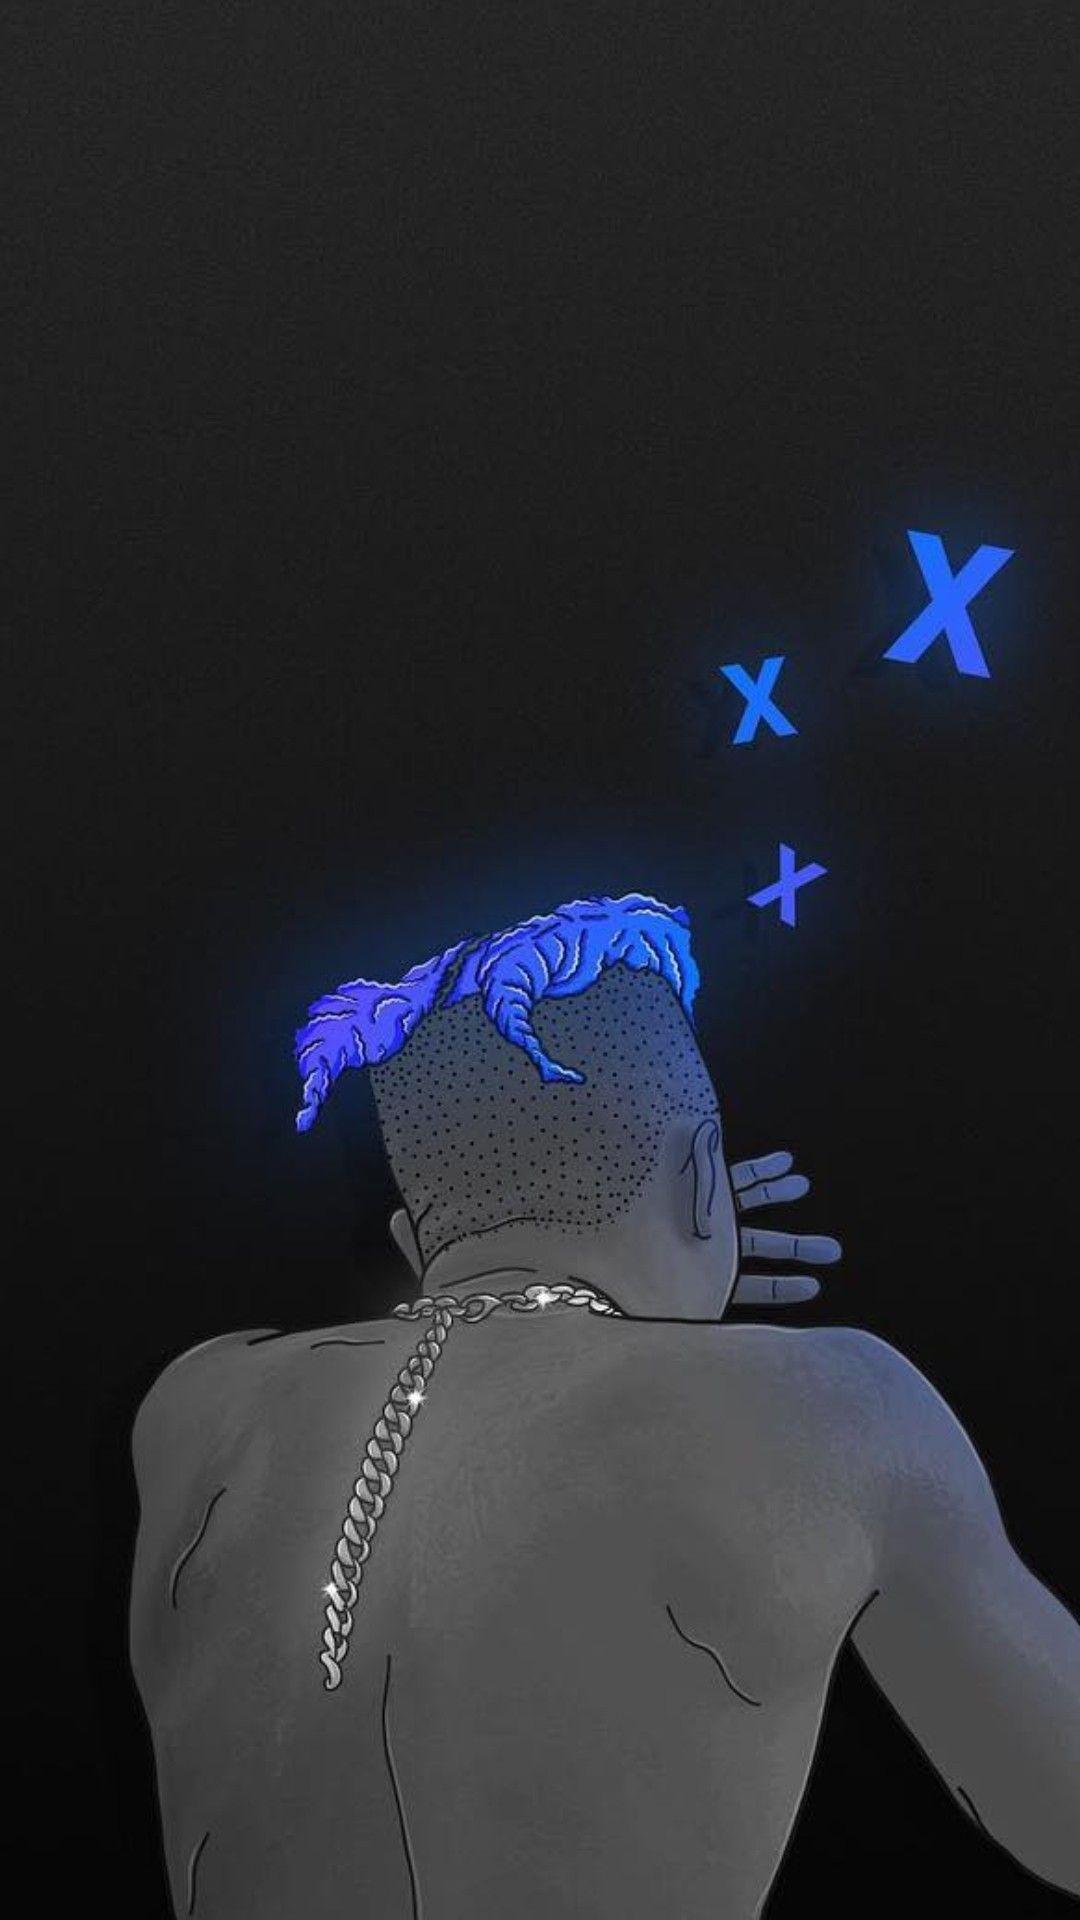 A man with blue hair and an x on his back - XXXTentacion